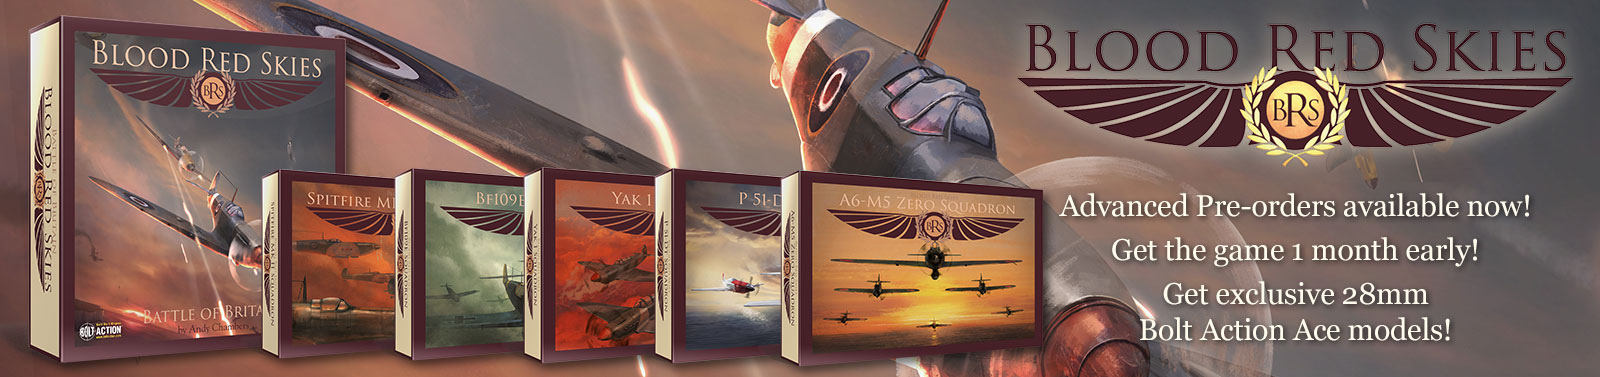 Warlord Games Wargaming miniatures Blood Red Skies German Ace Pilot Adolf Galland set